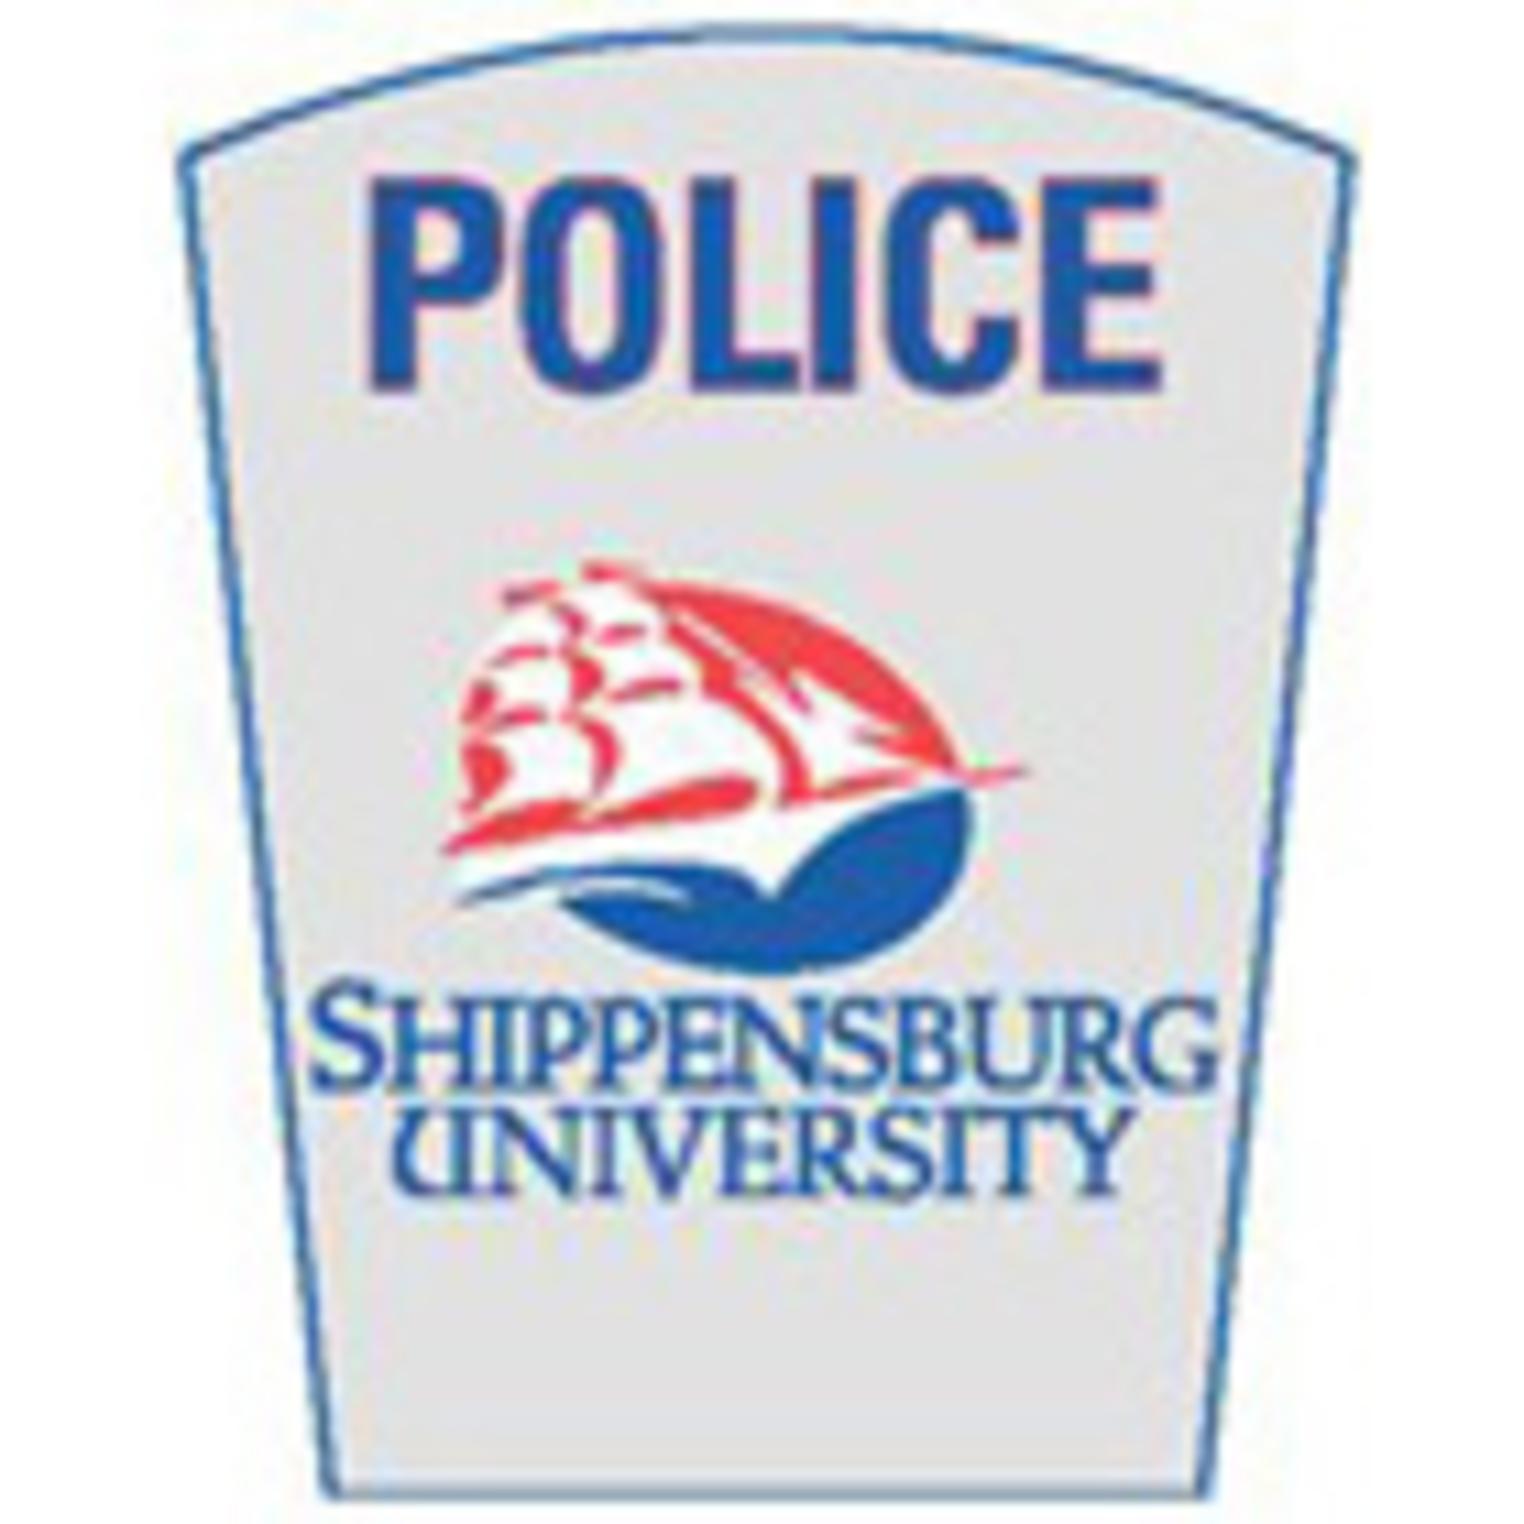 Shippensburg University Police